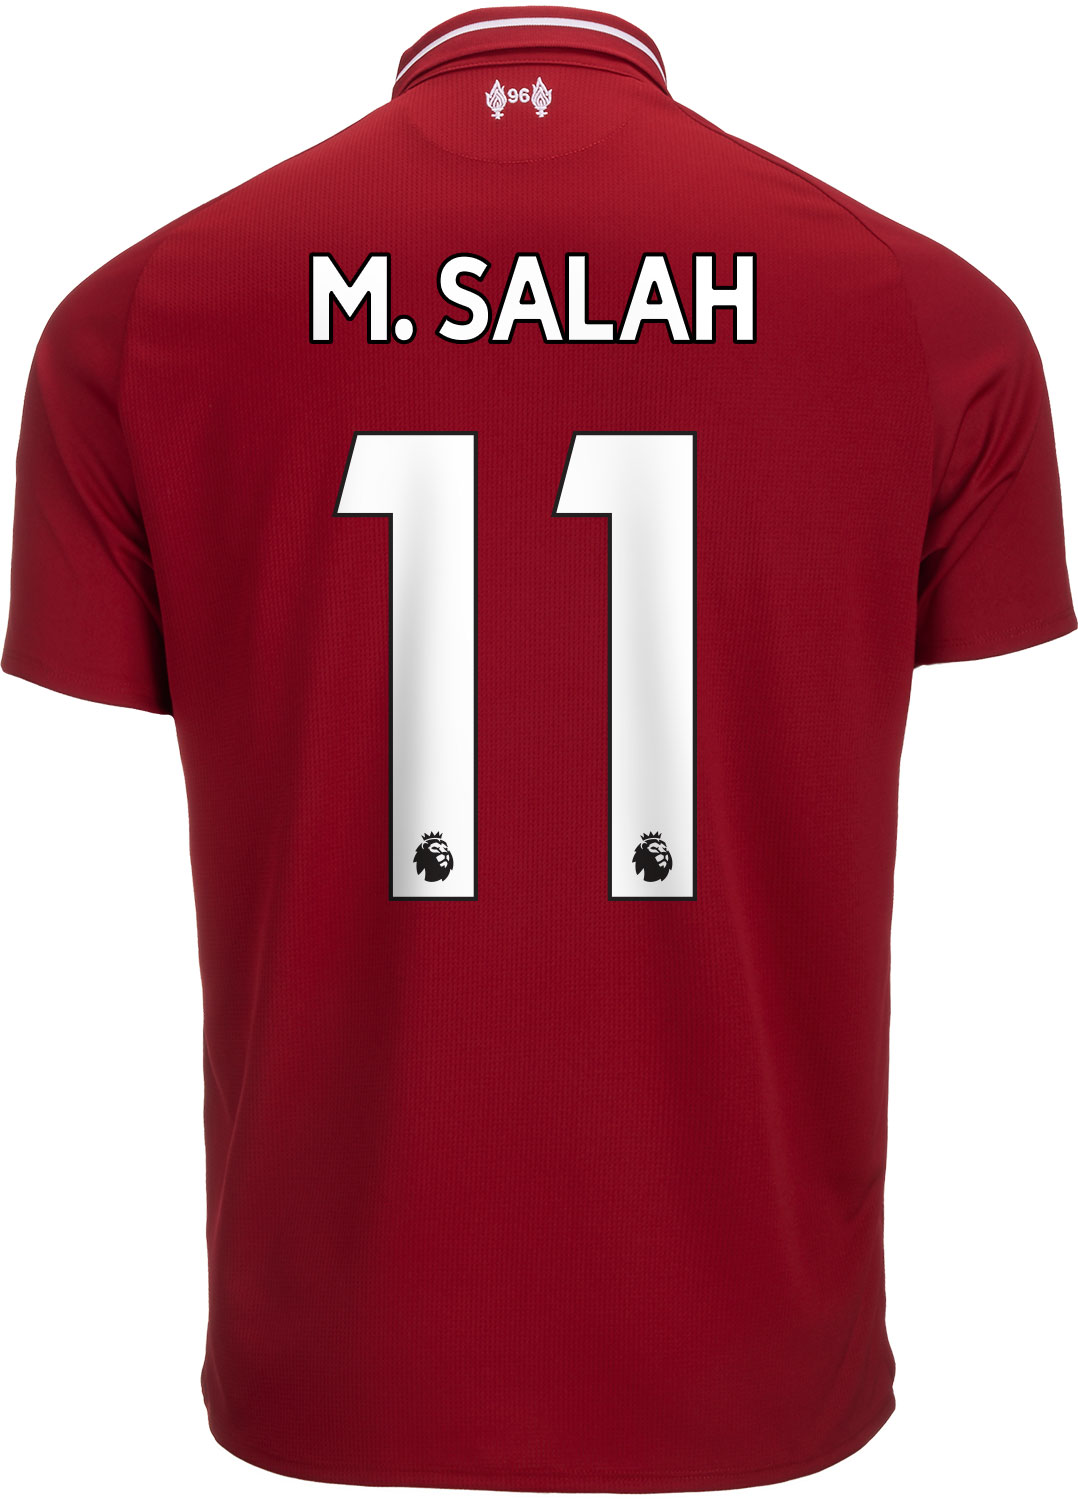 Mohamed Salah Liverpool Home Jersey 